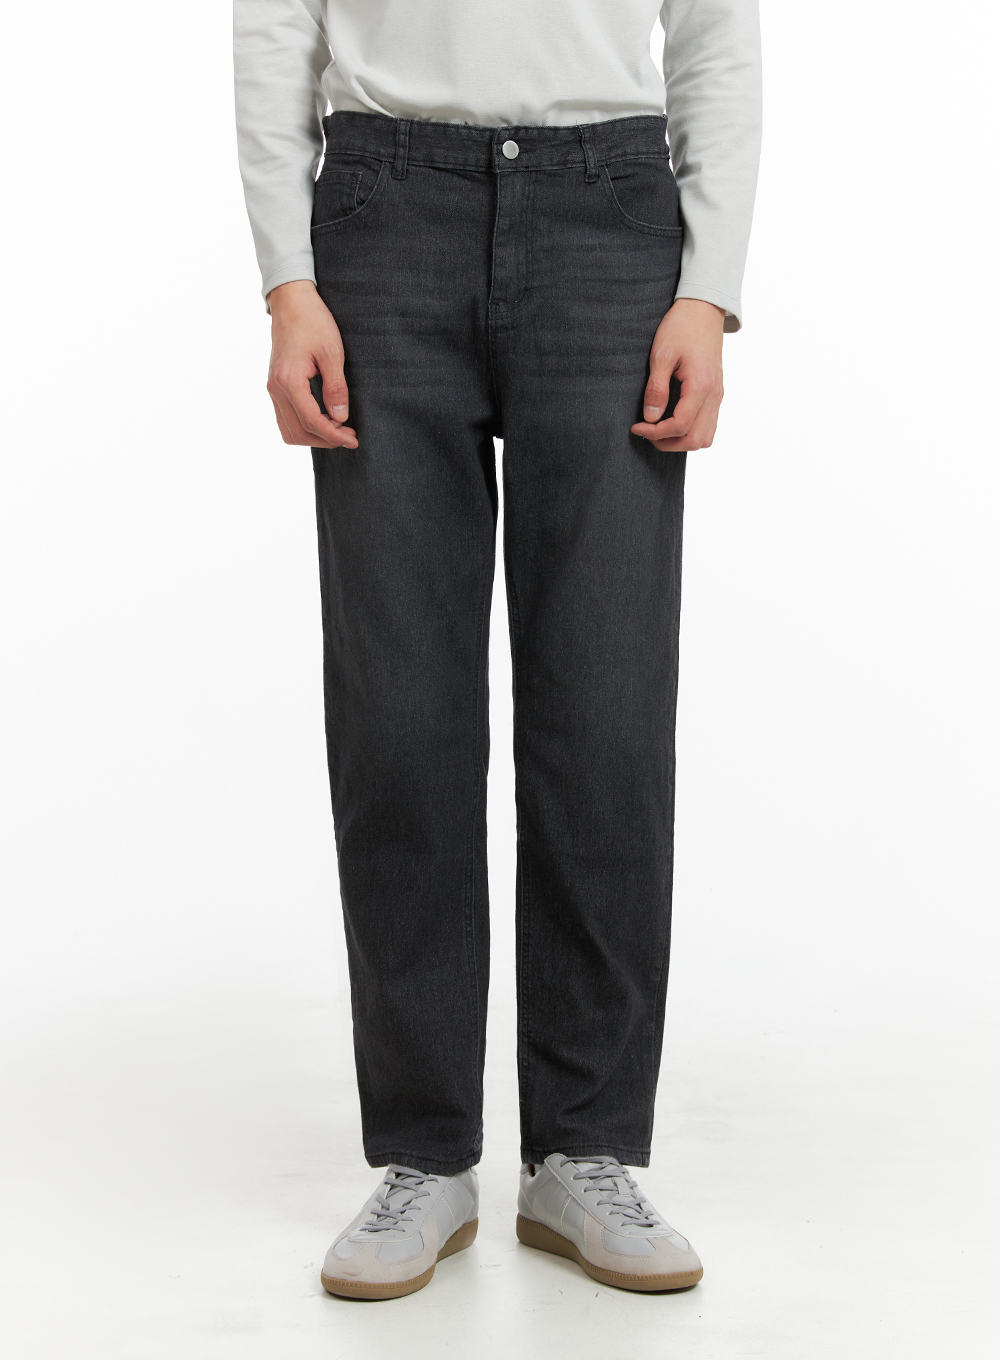 mens-cropped-slim-fit-jeans-ia402 / Black